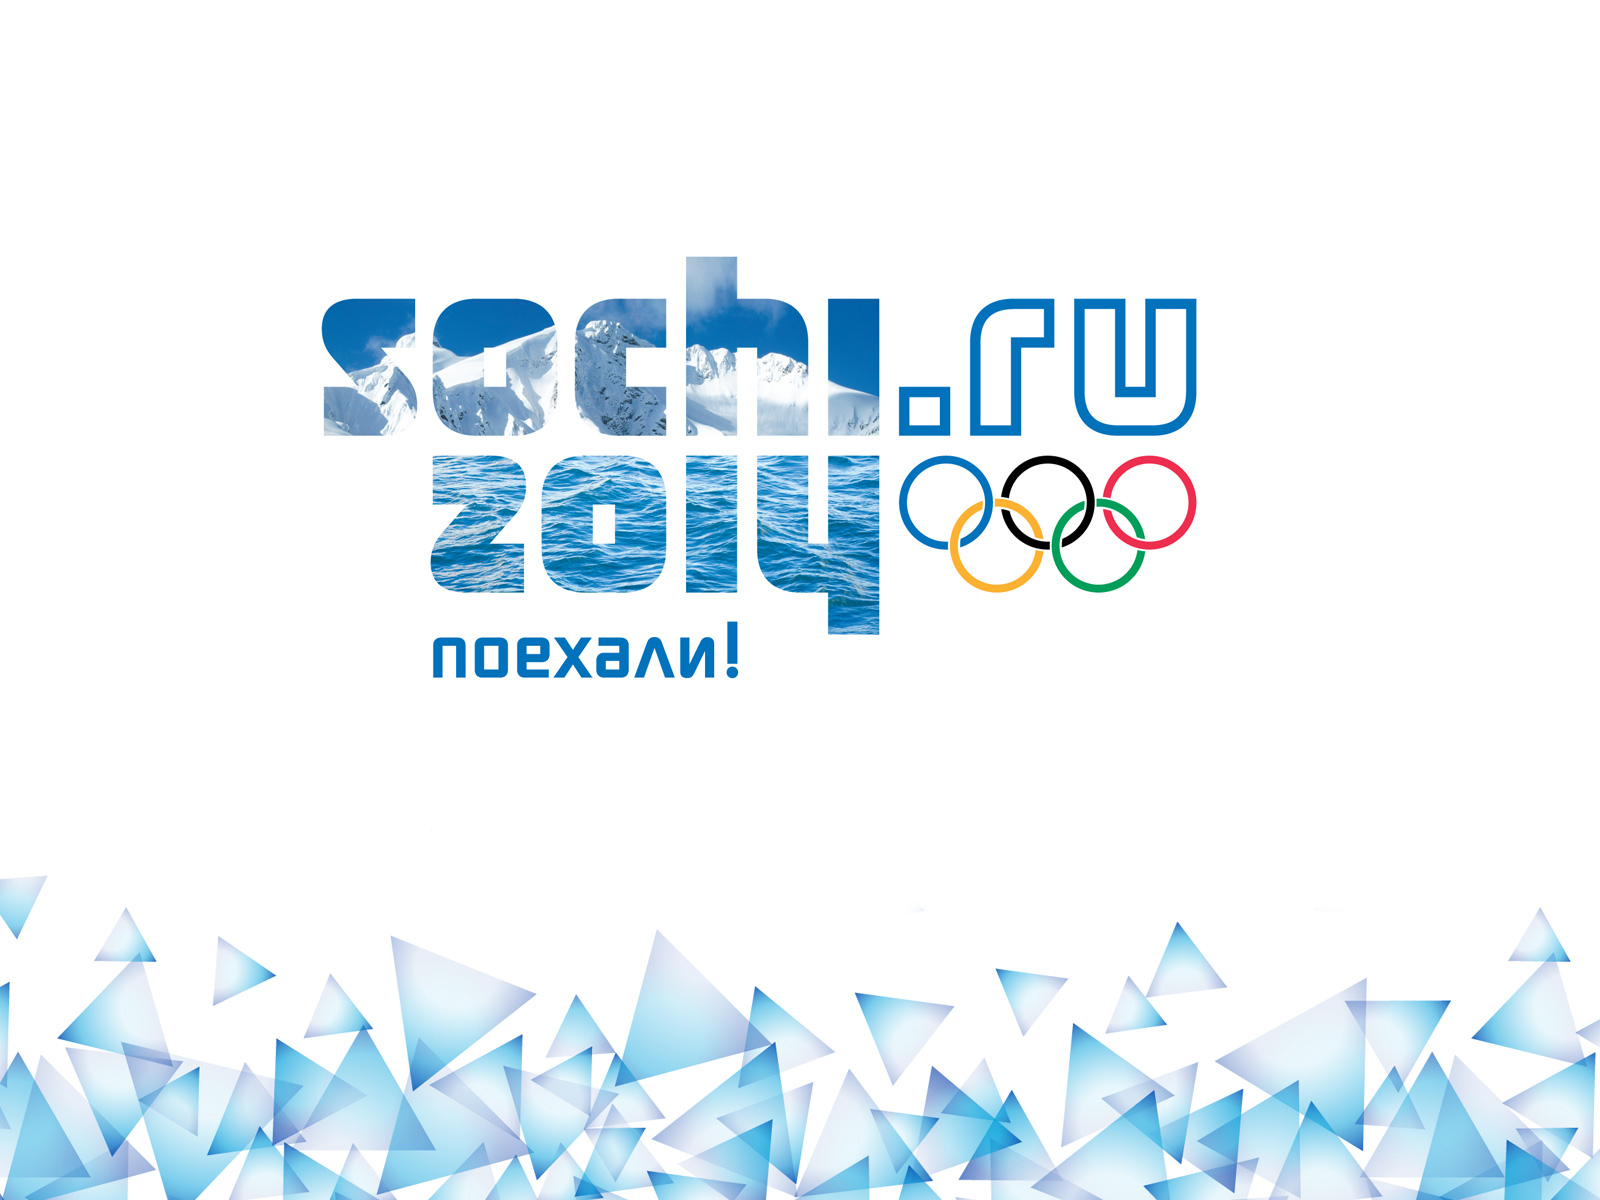 2014-sochi-olympics-poster